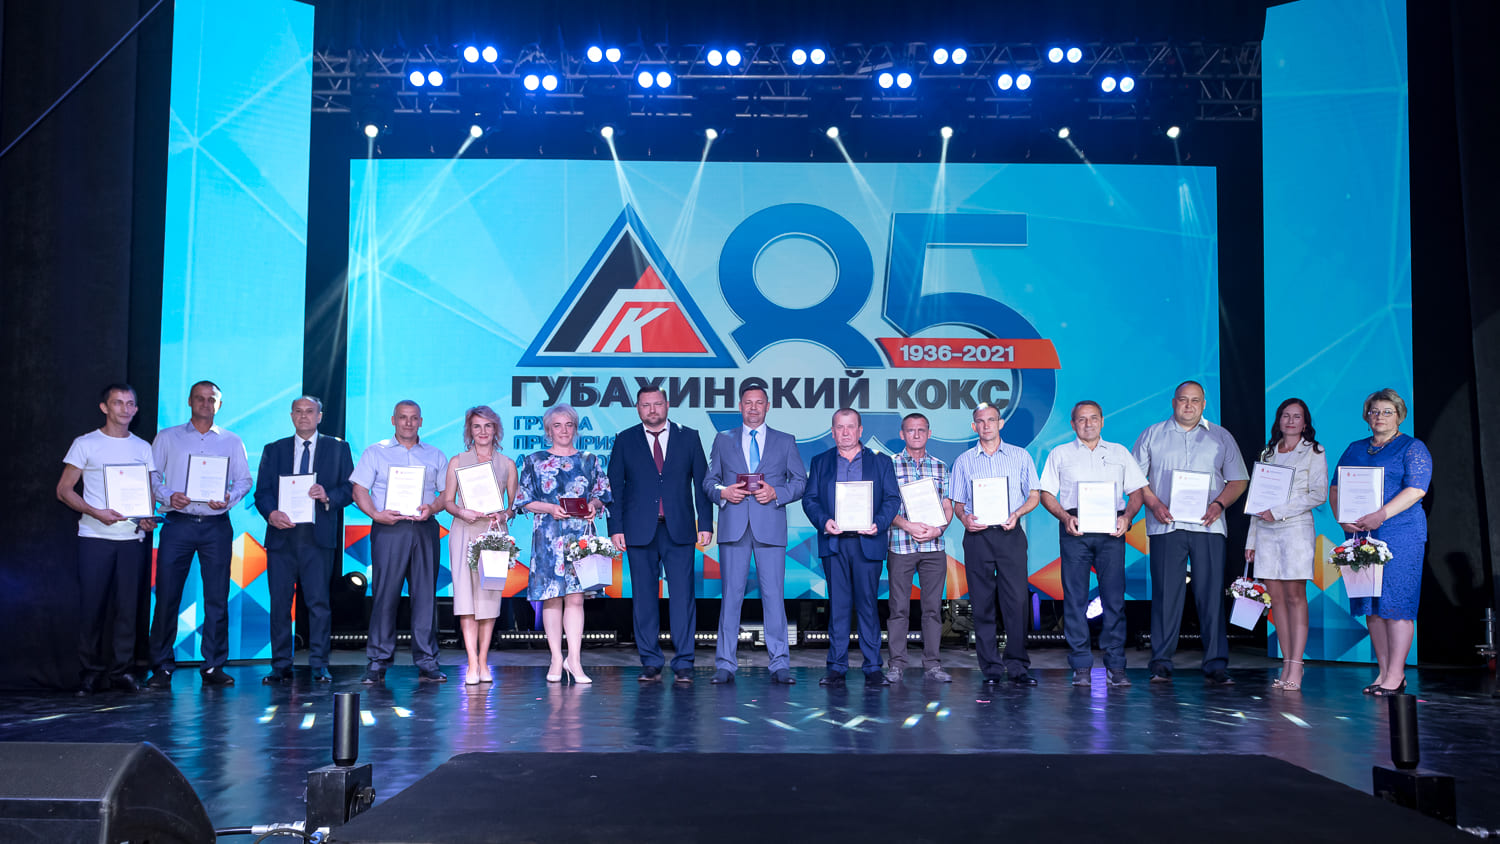 5 автомобилей Toyota Corolla и 85 путевок на Черное море получили работники Губахинского кокса в честь юбилея предприятия.. Стройсервис